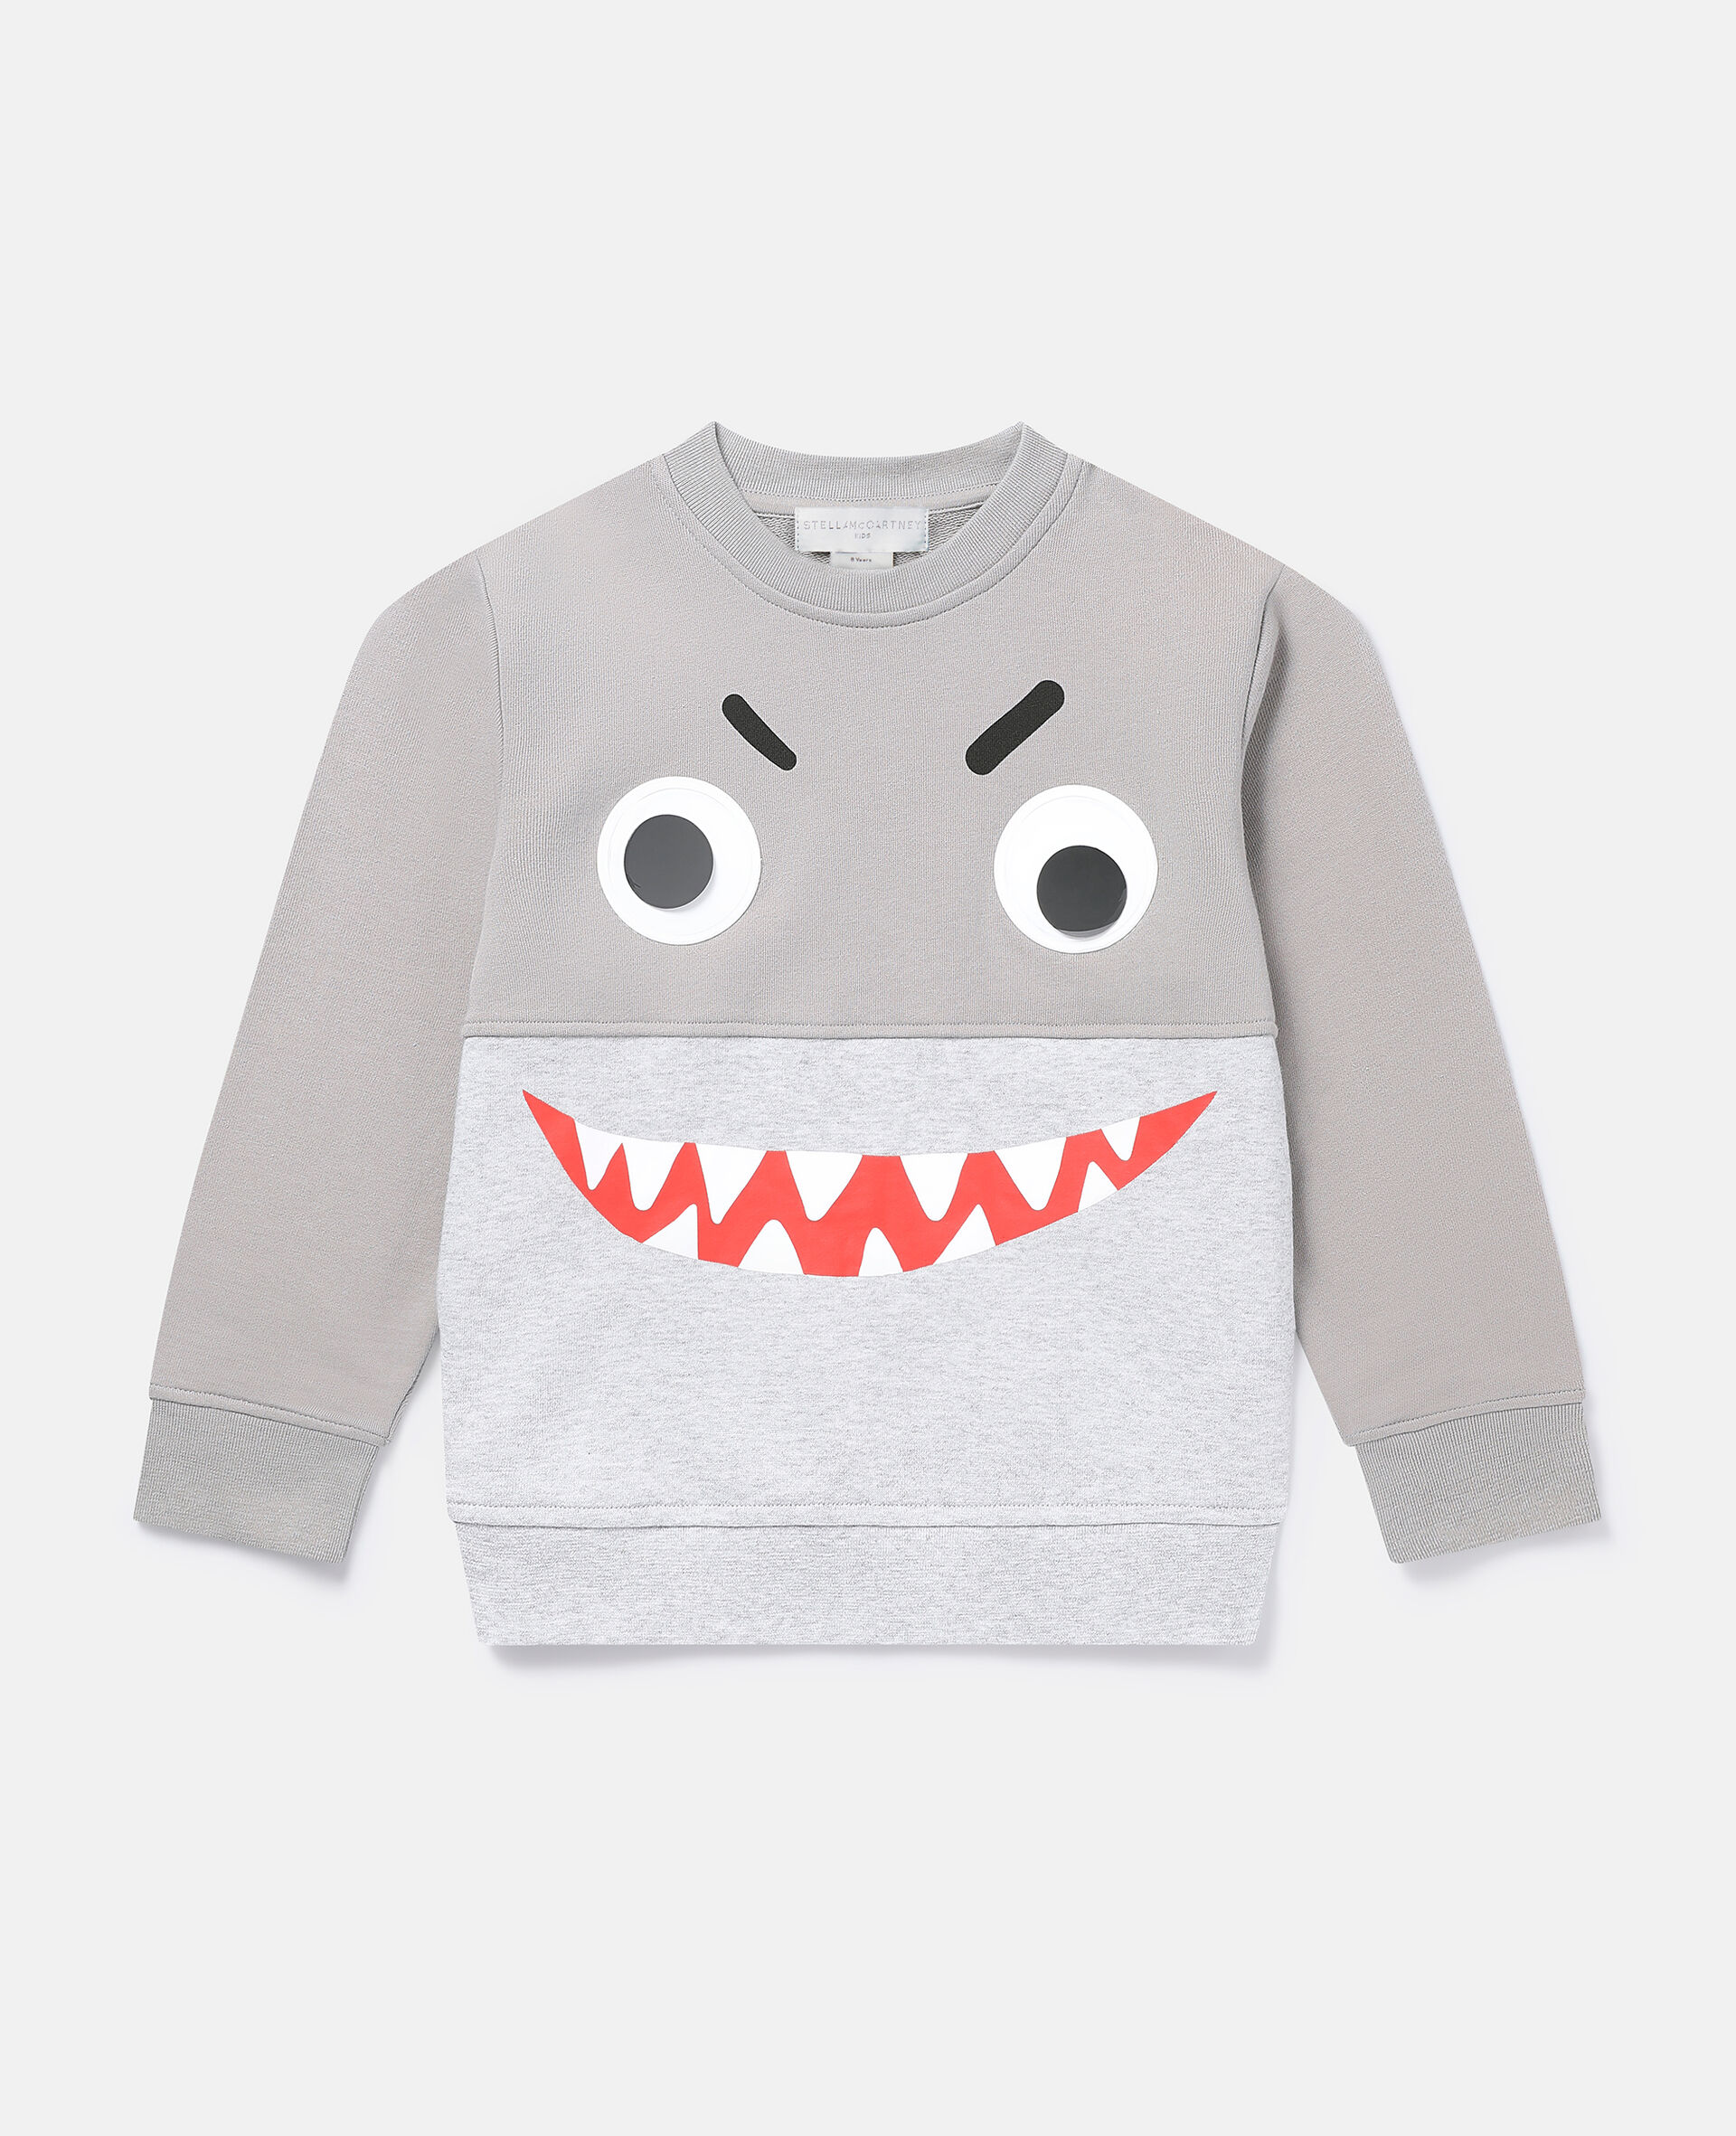 Shark Face Colourblock Sweatshirt-Grey-large image number 0